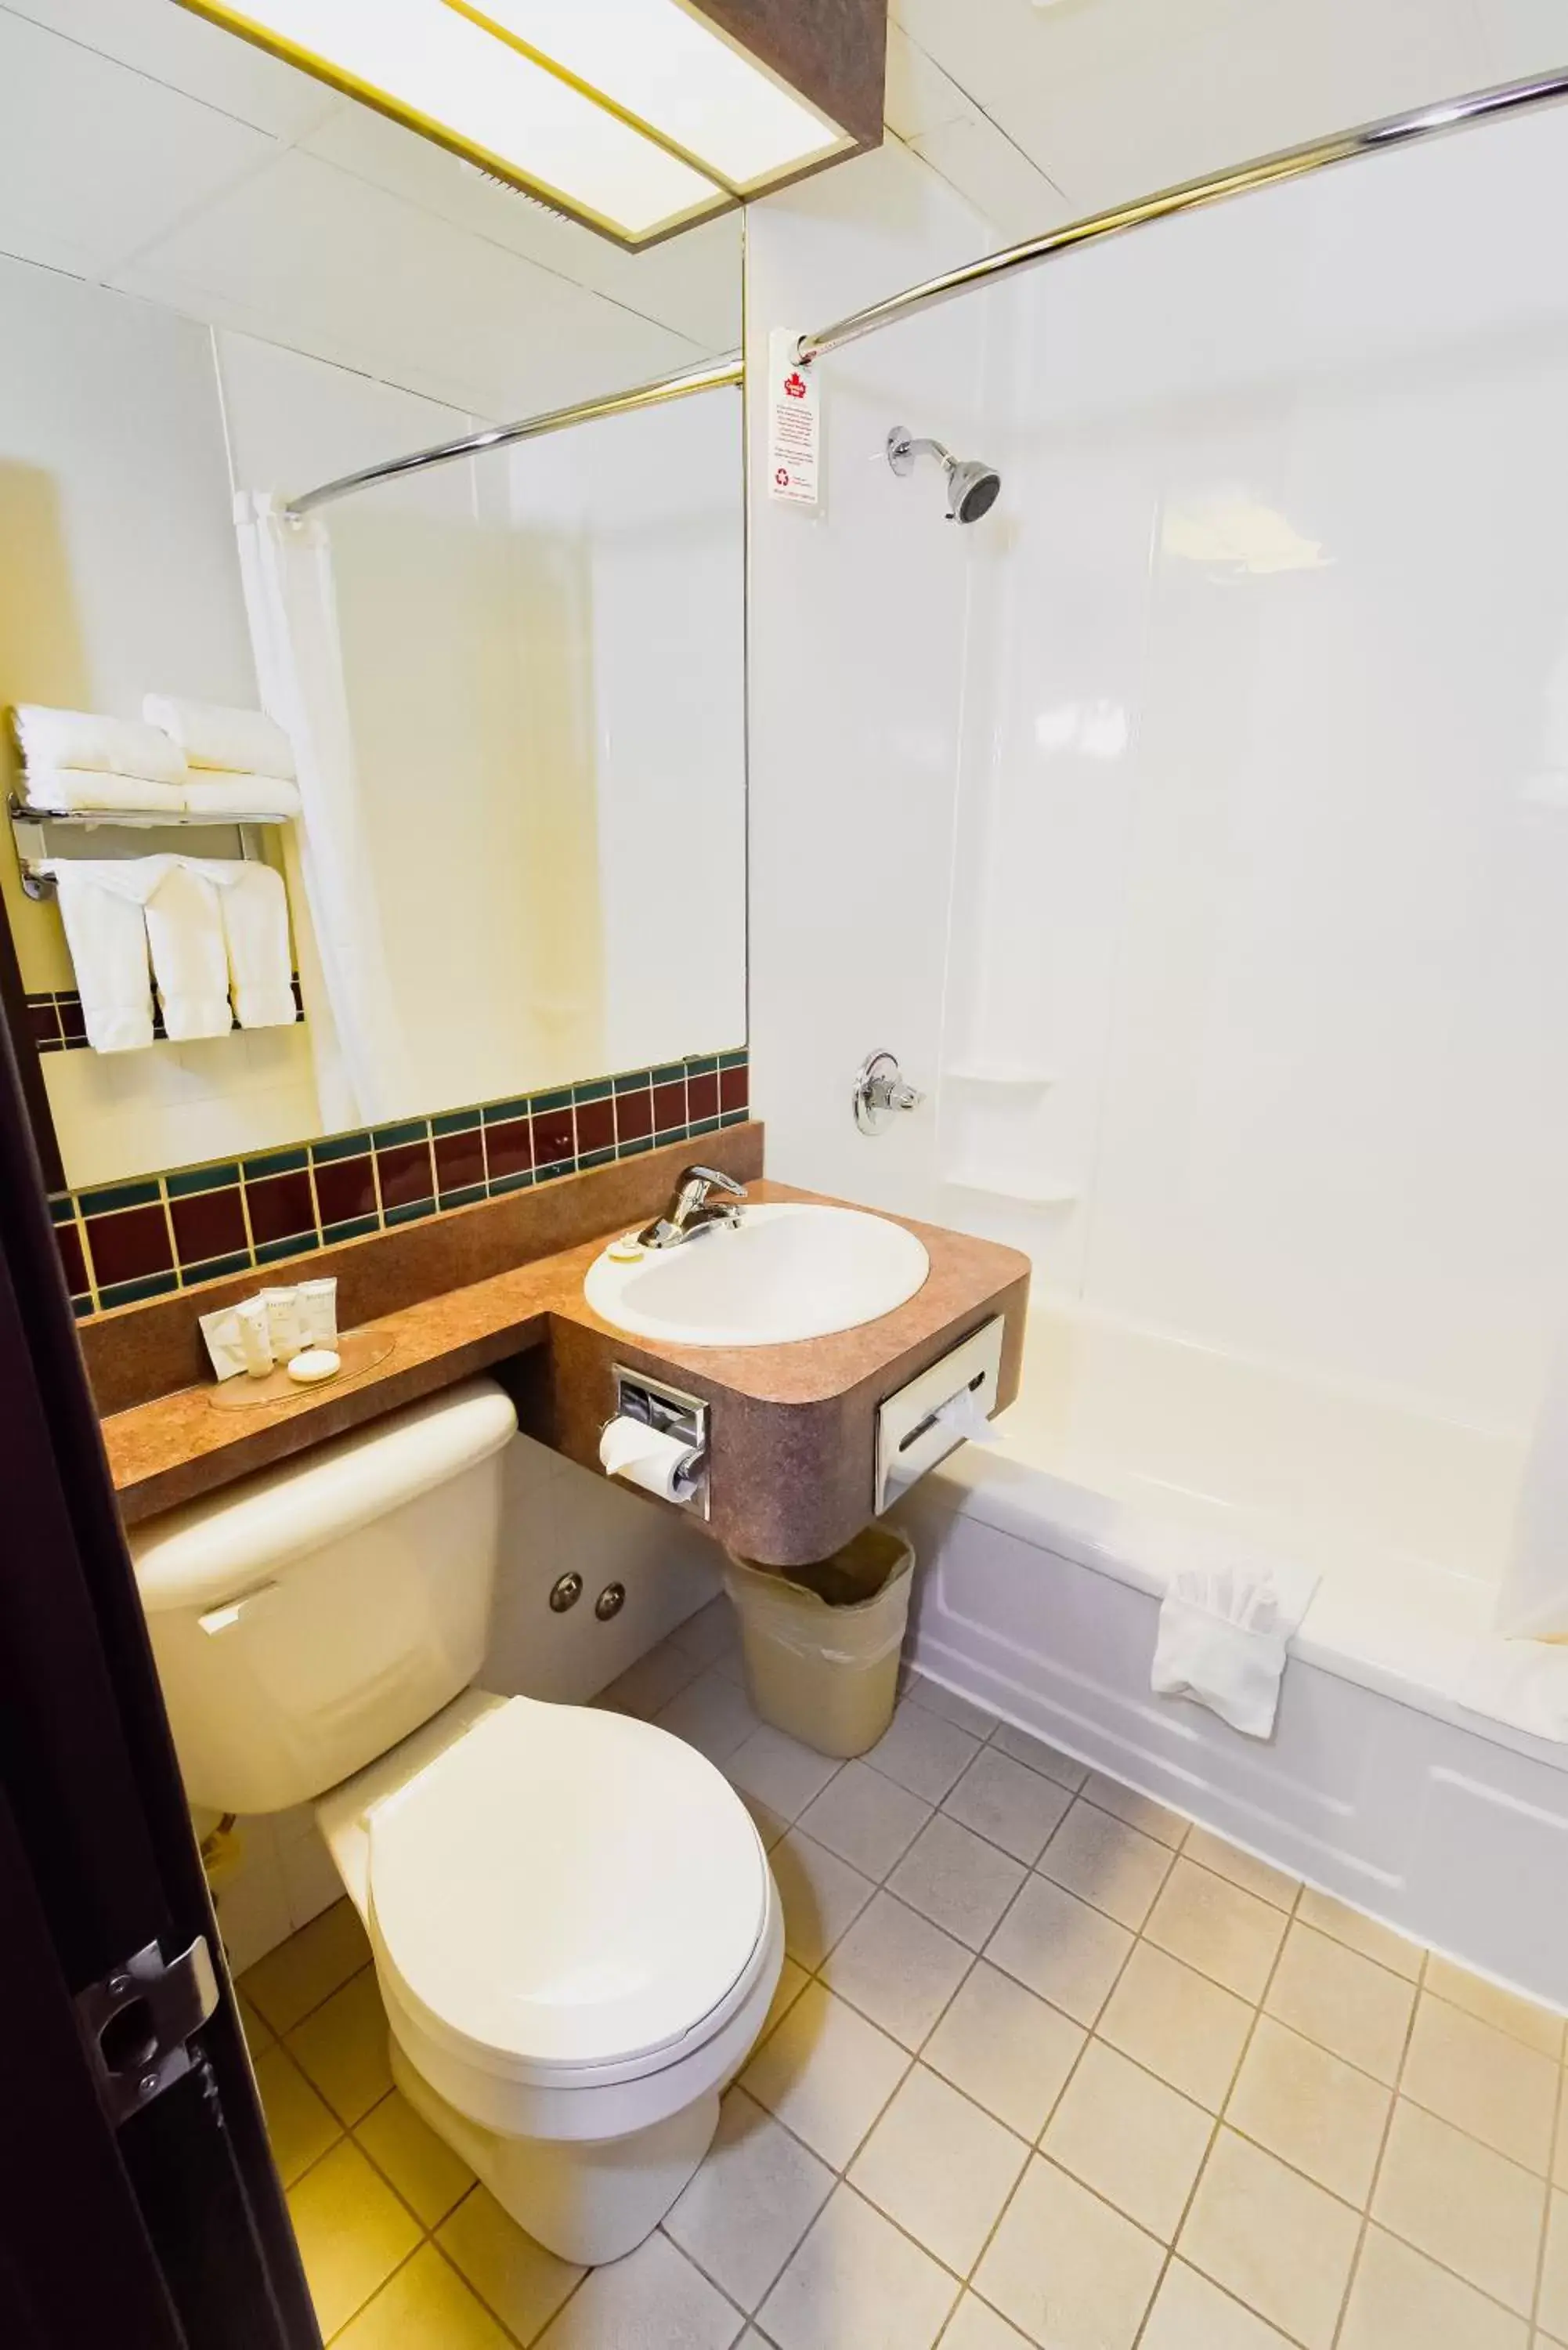 Bathroom in Canad Inns Destination Centre Windsor Park